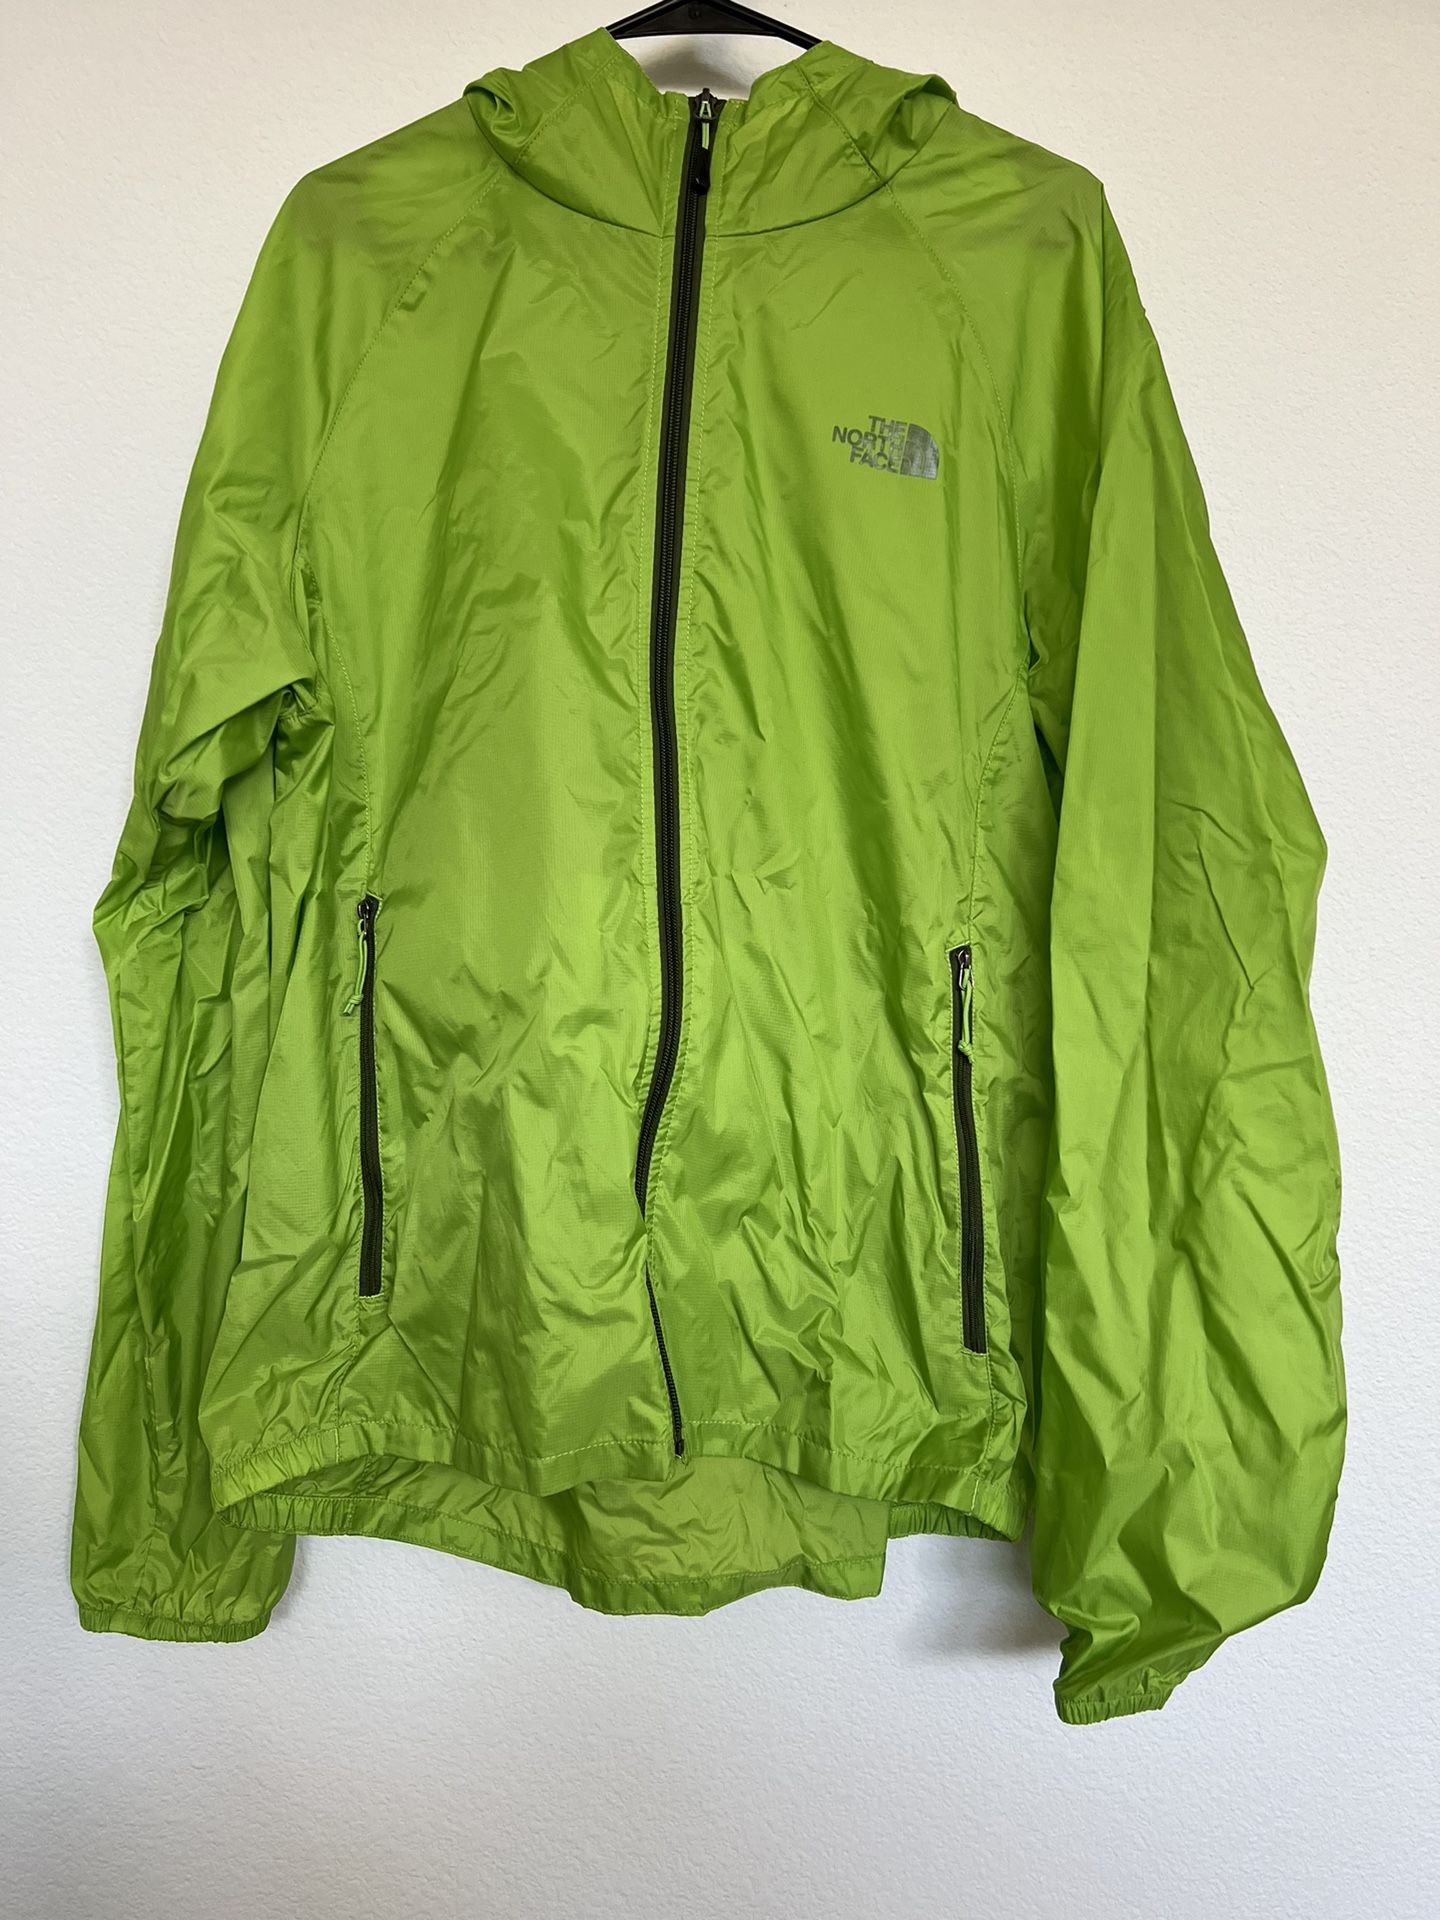 The North Face Rain Windbreaker Jacket Coat 